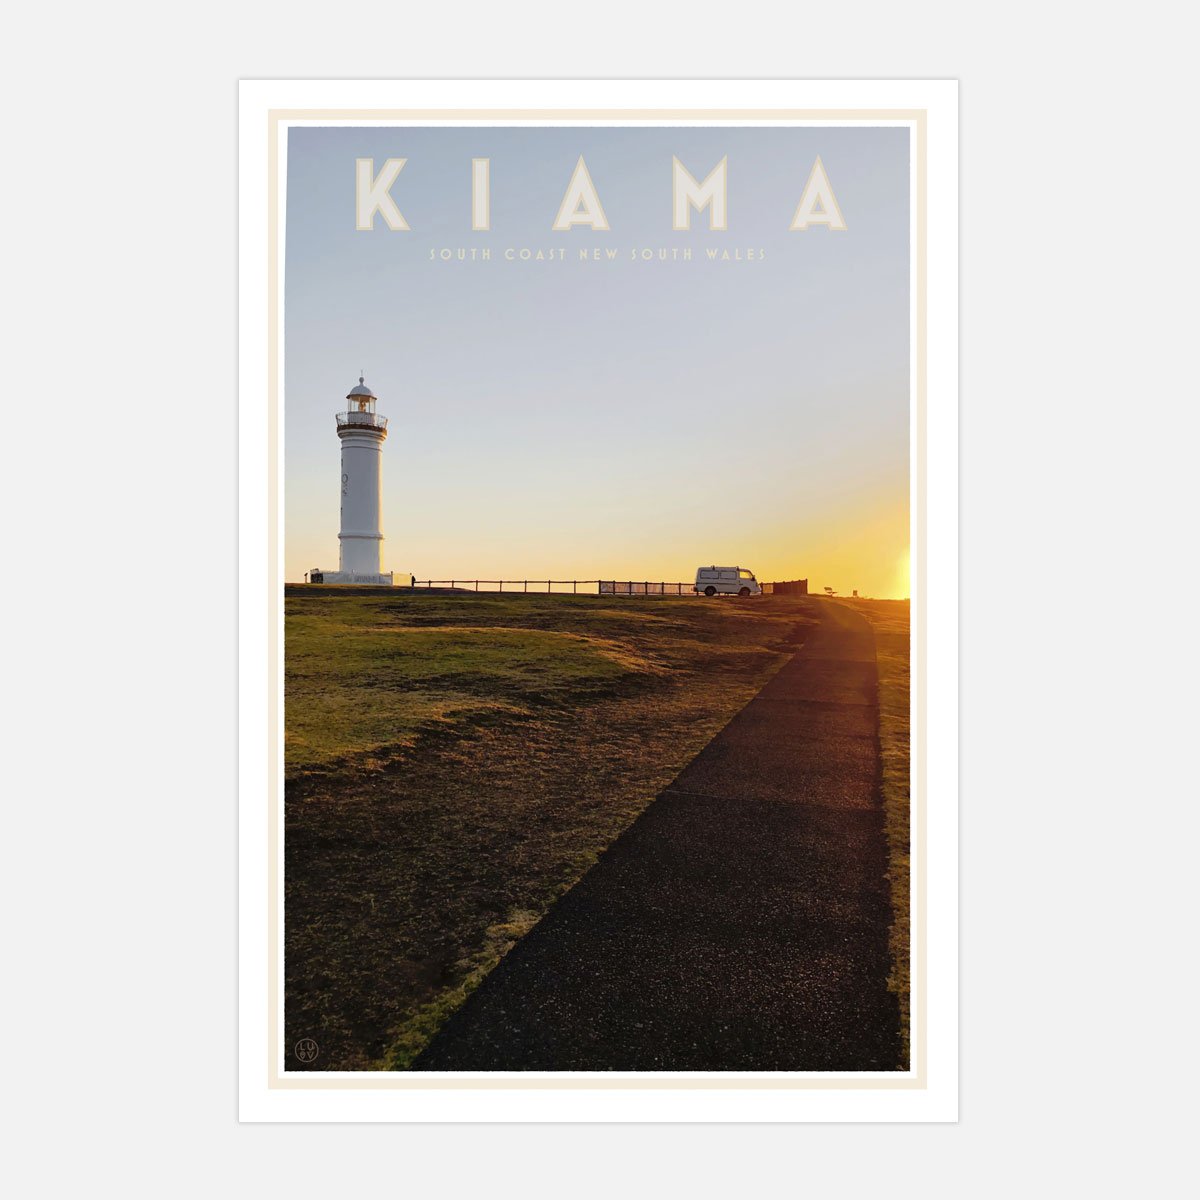 Kiama vintage travel style print design by Places We Luv